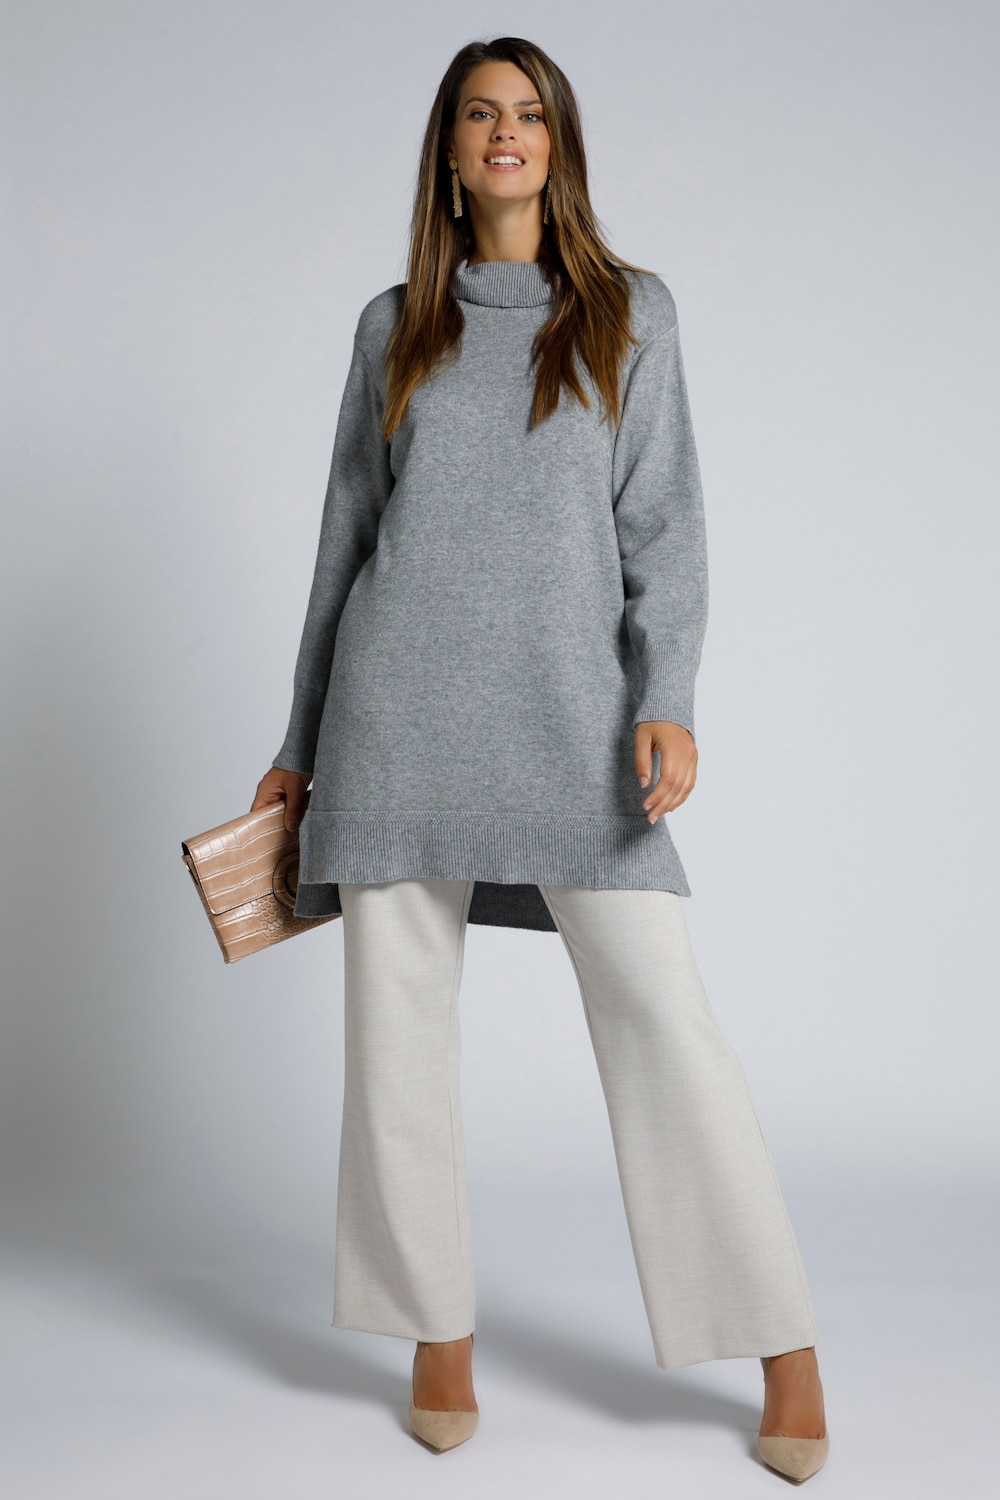 Plus Size Draped Turtleneck Long Sweater, Woman, grey, size: 20/22, viscose/polyester/synthetic fibers, Ulla Popken